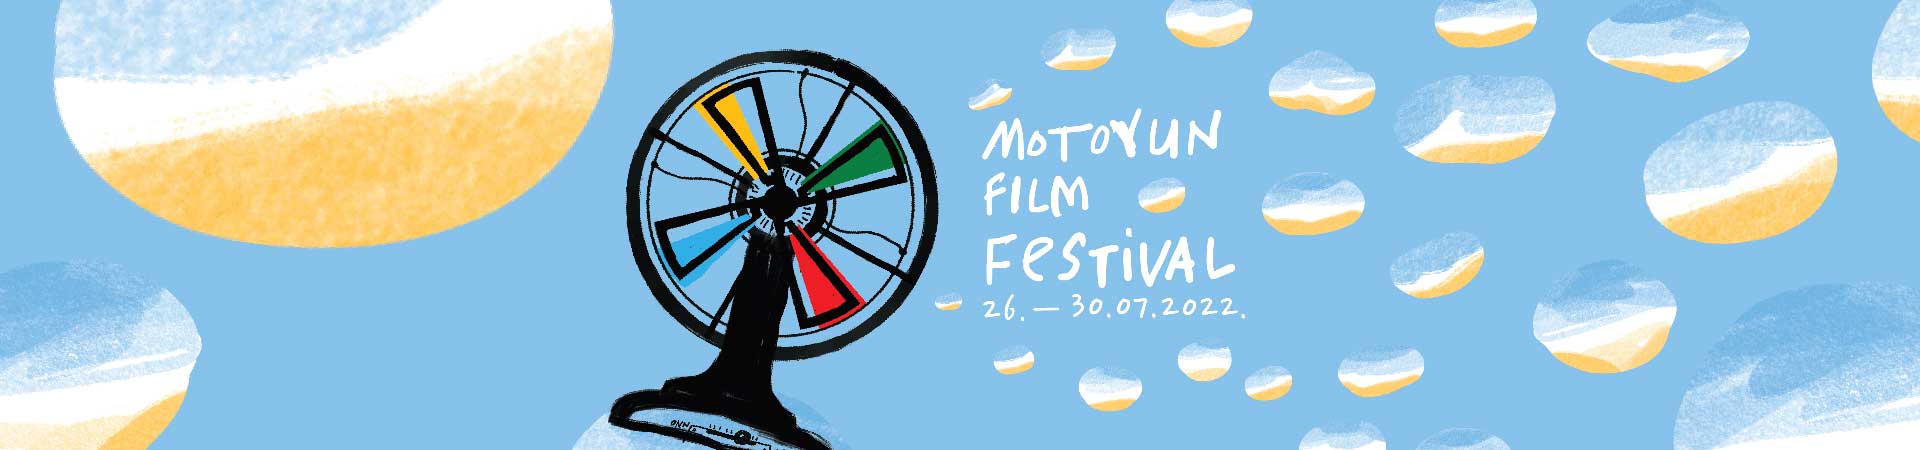 Motovun 2022: Pobunjeni velikani i mlade ljubavi – Švedska u fokusu Motovun Film Festivala